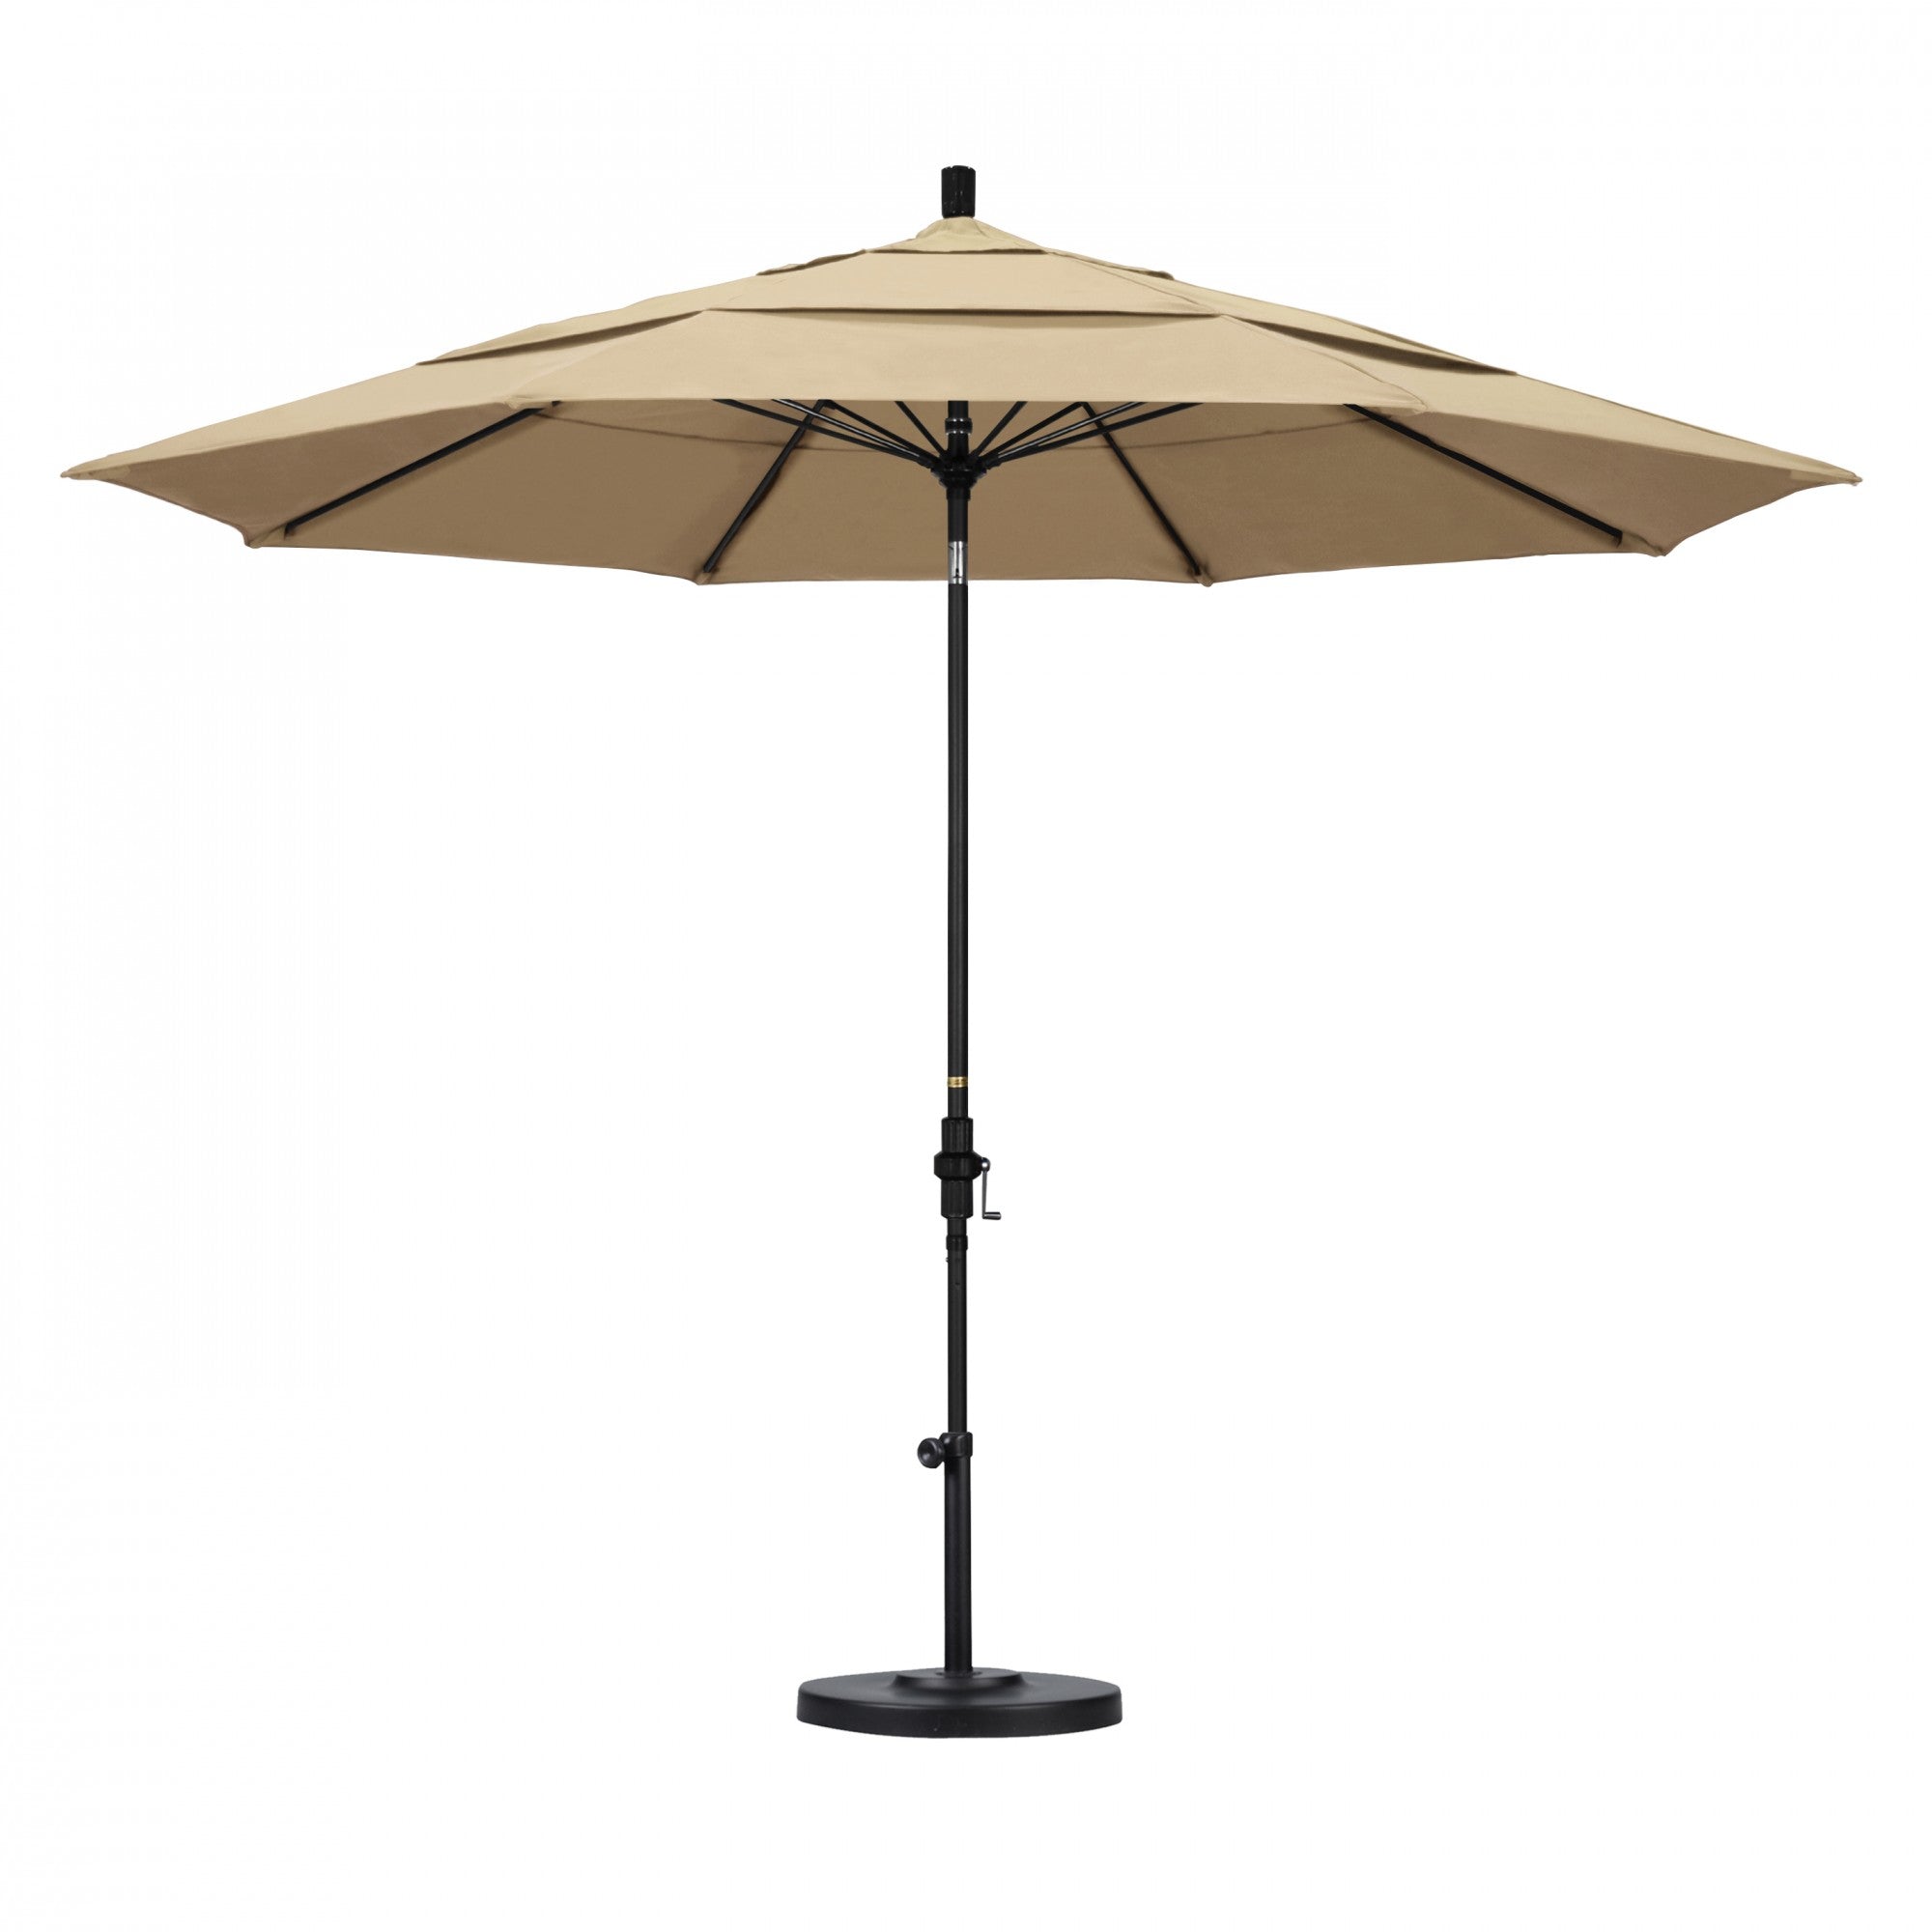 California Umbrella - 11' - Patio Umbrella Umbrella - Aluminum Pole - Beige - Pacifica - GSCUF118705-SA22-DWV